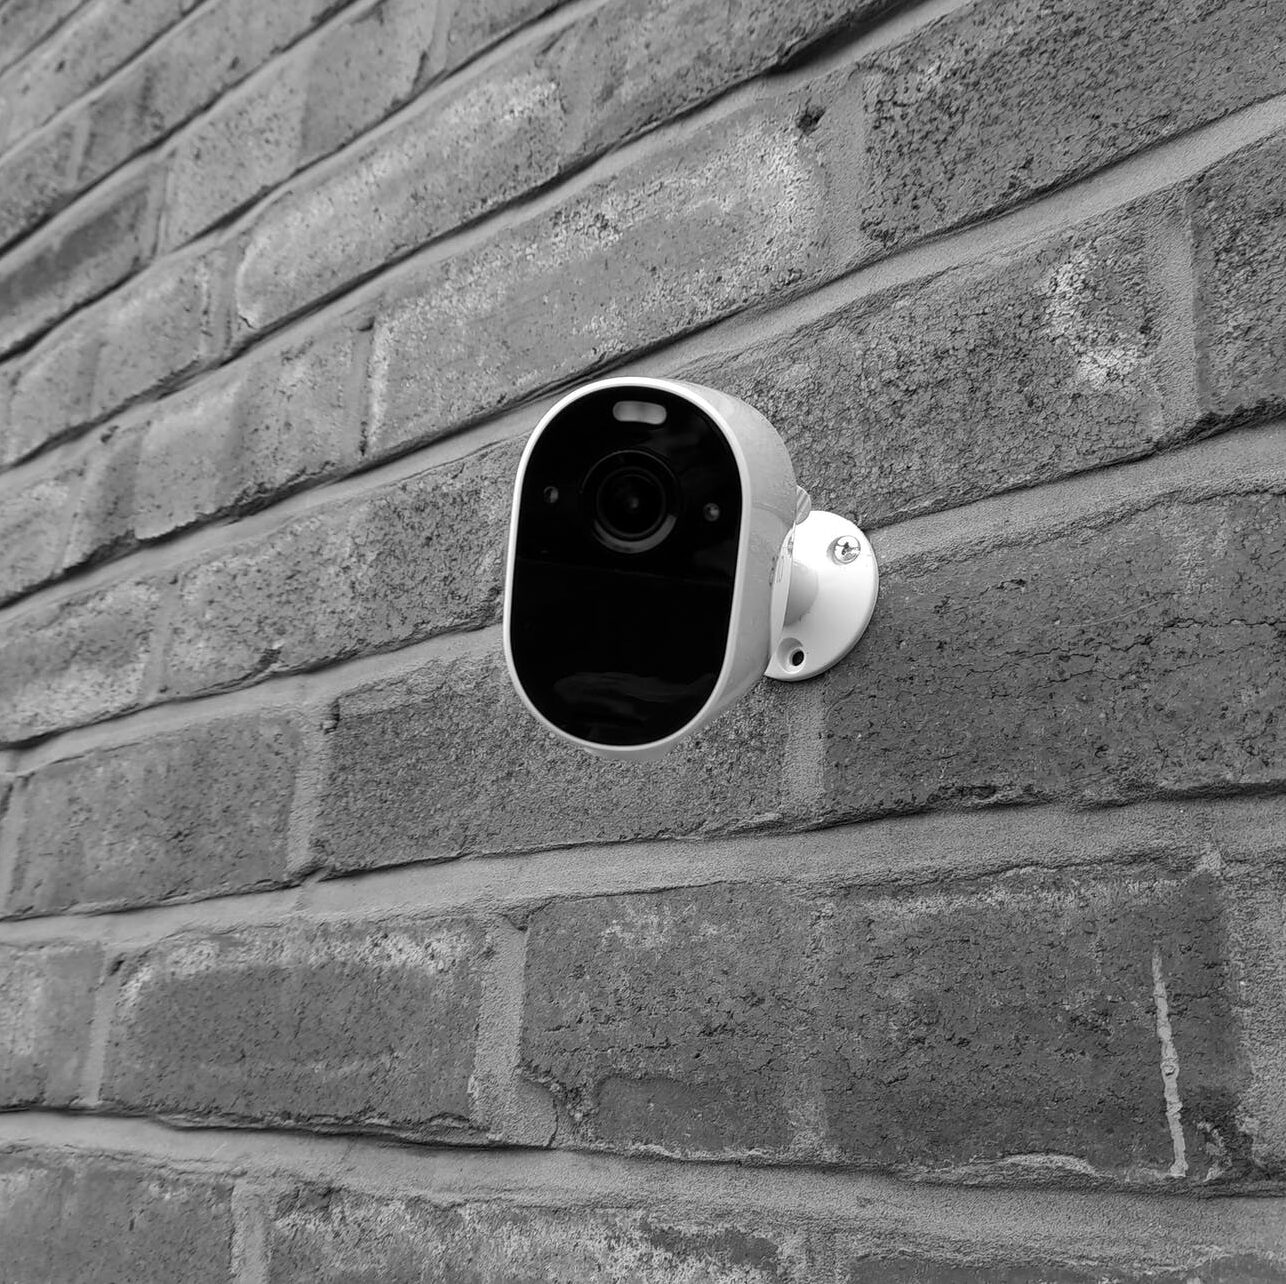 monochrome photo of a surveillance camera on a brick wall